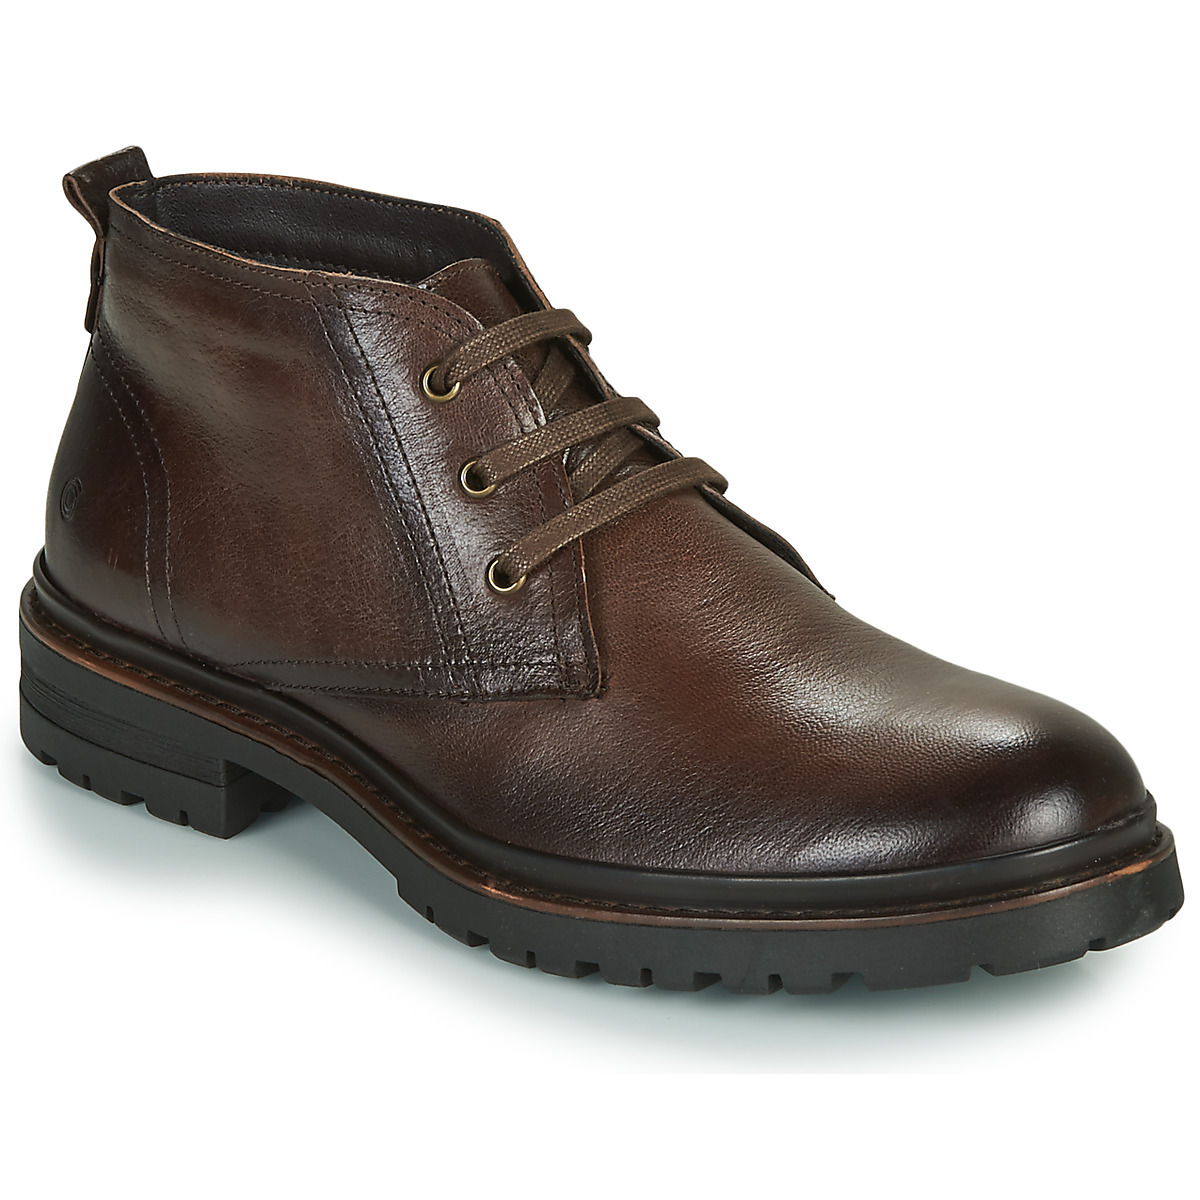 Spartoo - Gents Boots in Brown - Casualtitude GOOFASH